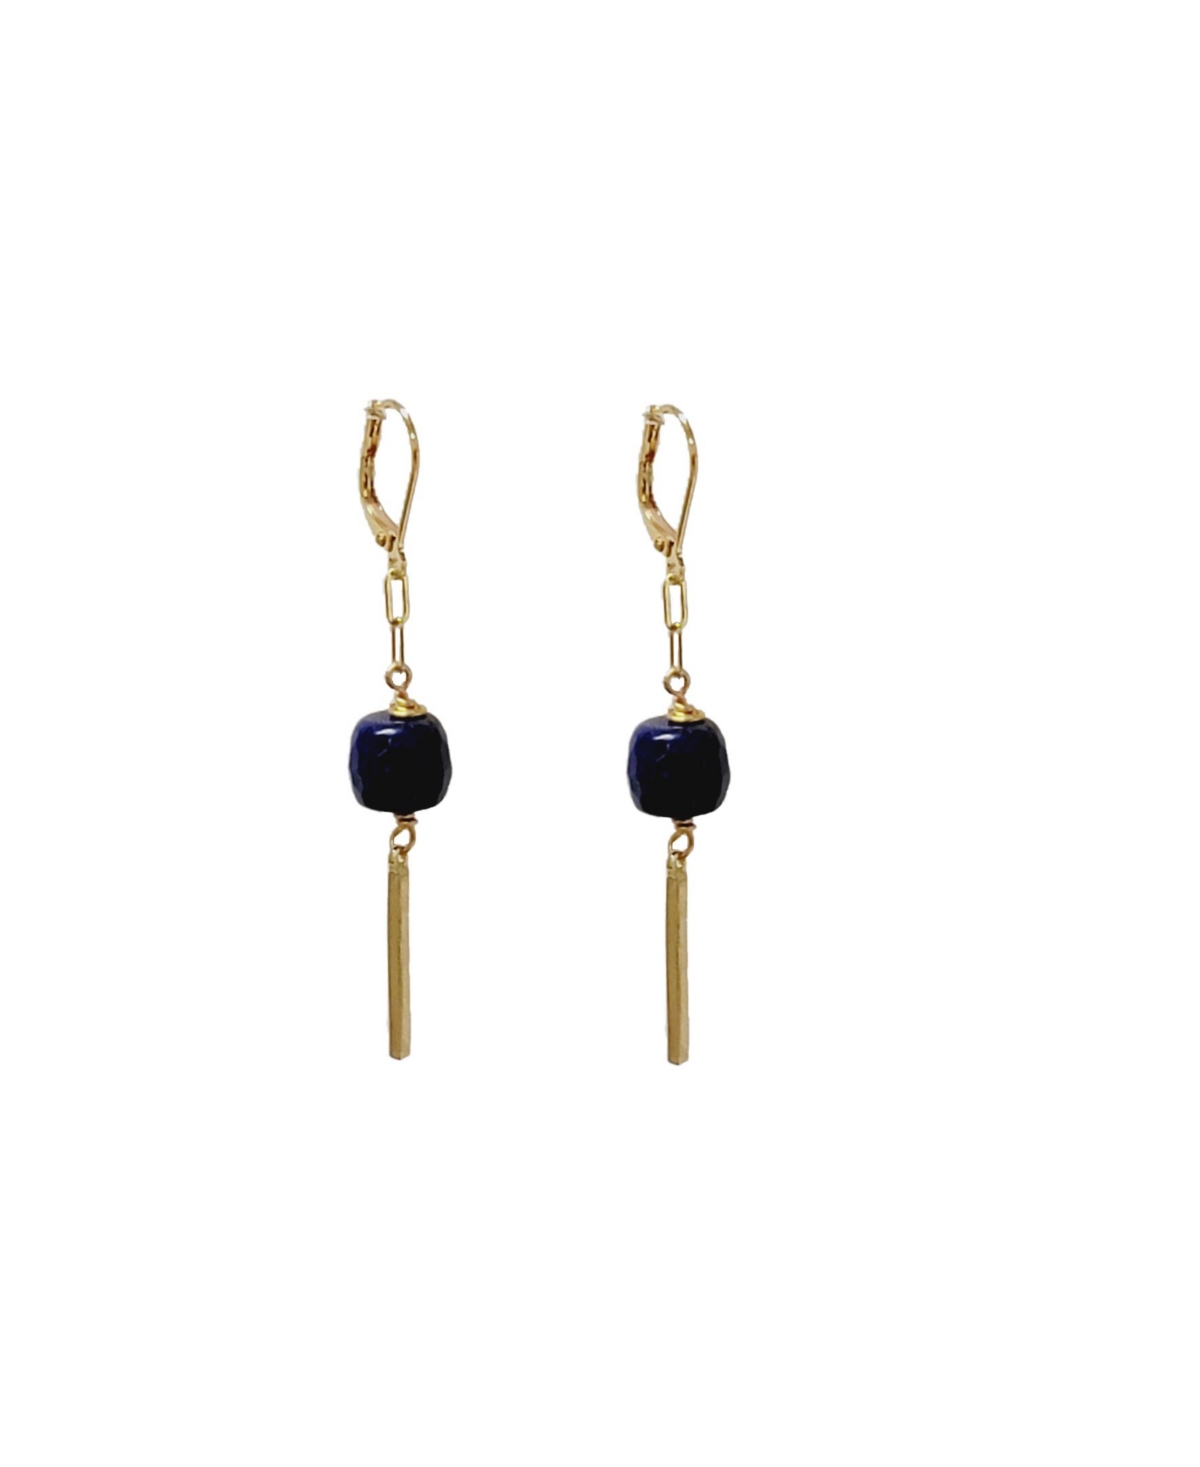 Women's Bar Drop Earrings with Blue Lapis Stones - Gold-tone